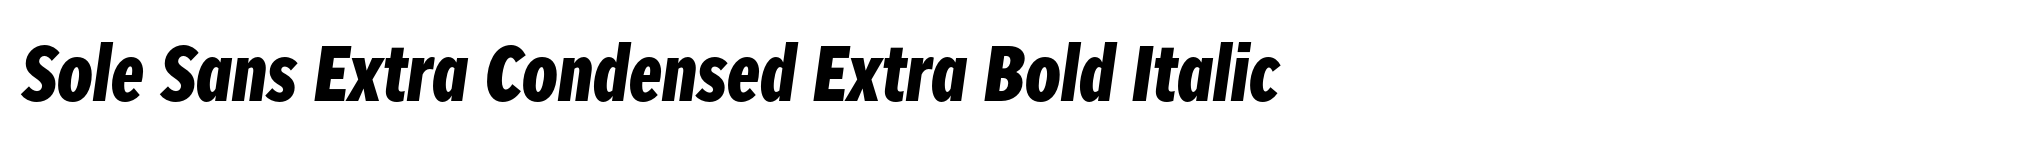 Sole Sans Extra Condensed Extra Bold Italic image